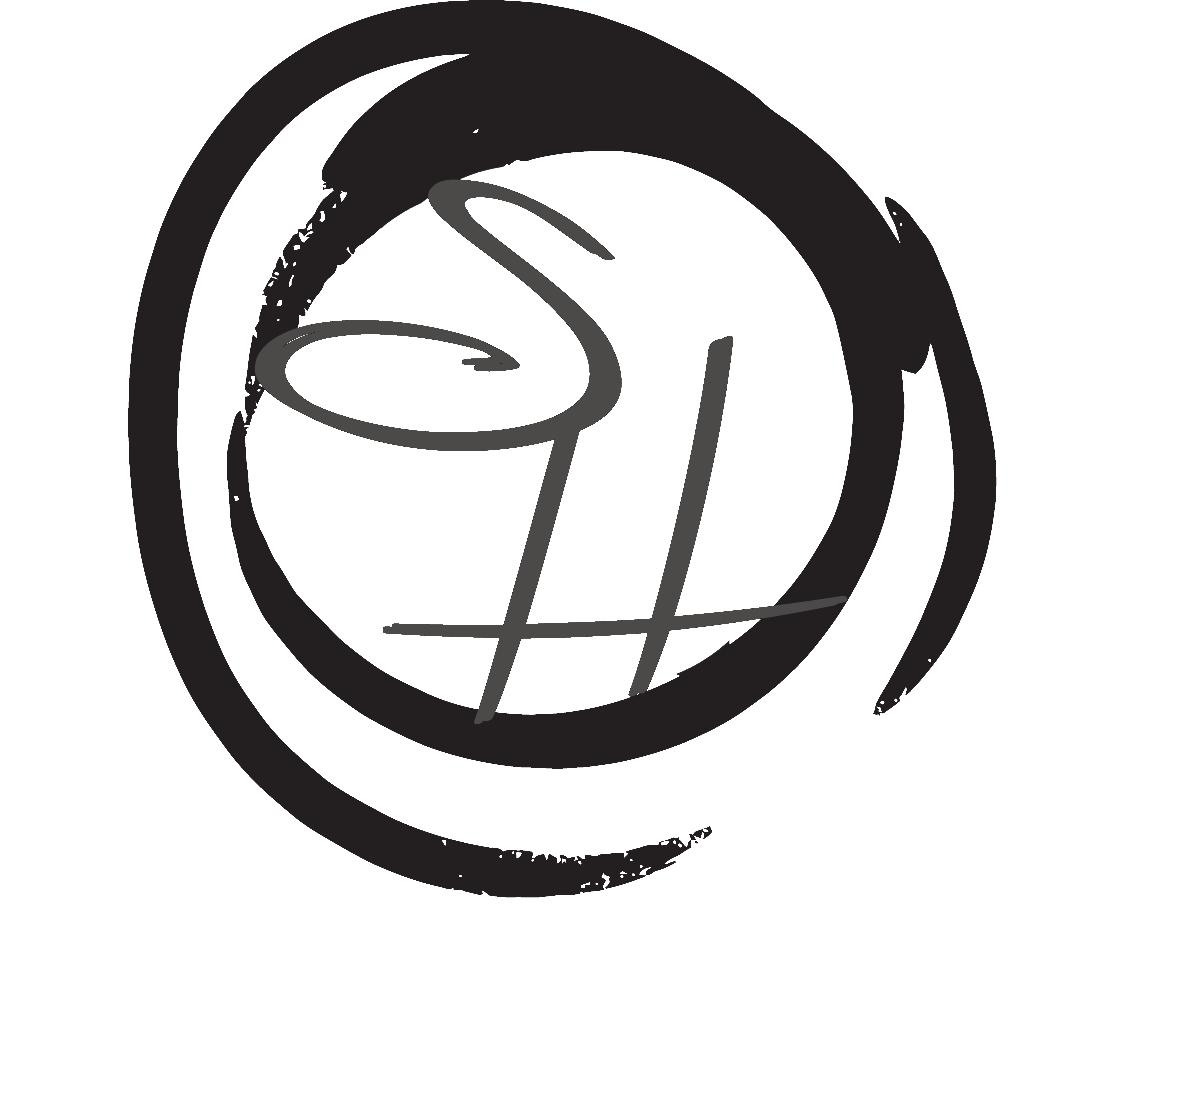 Sarah Hobbs